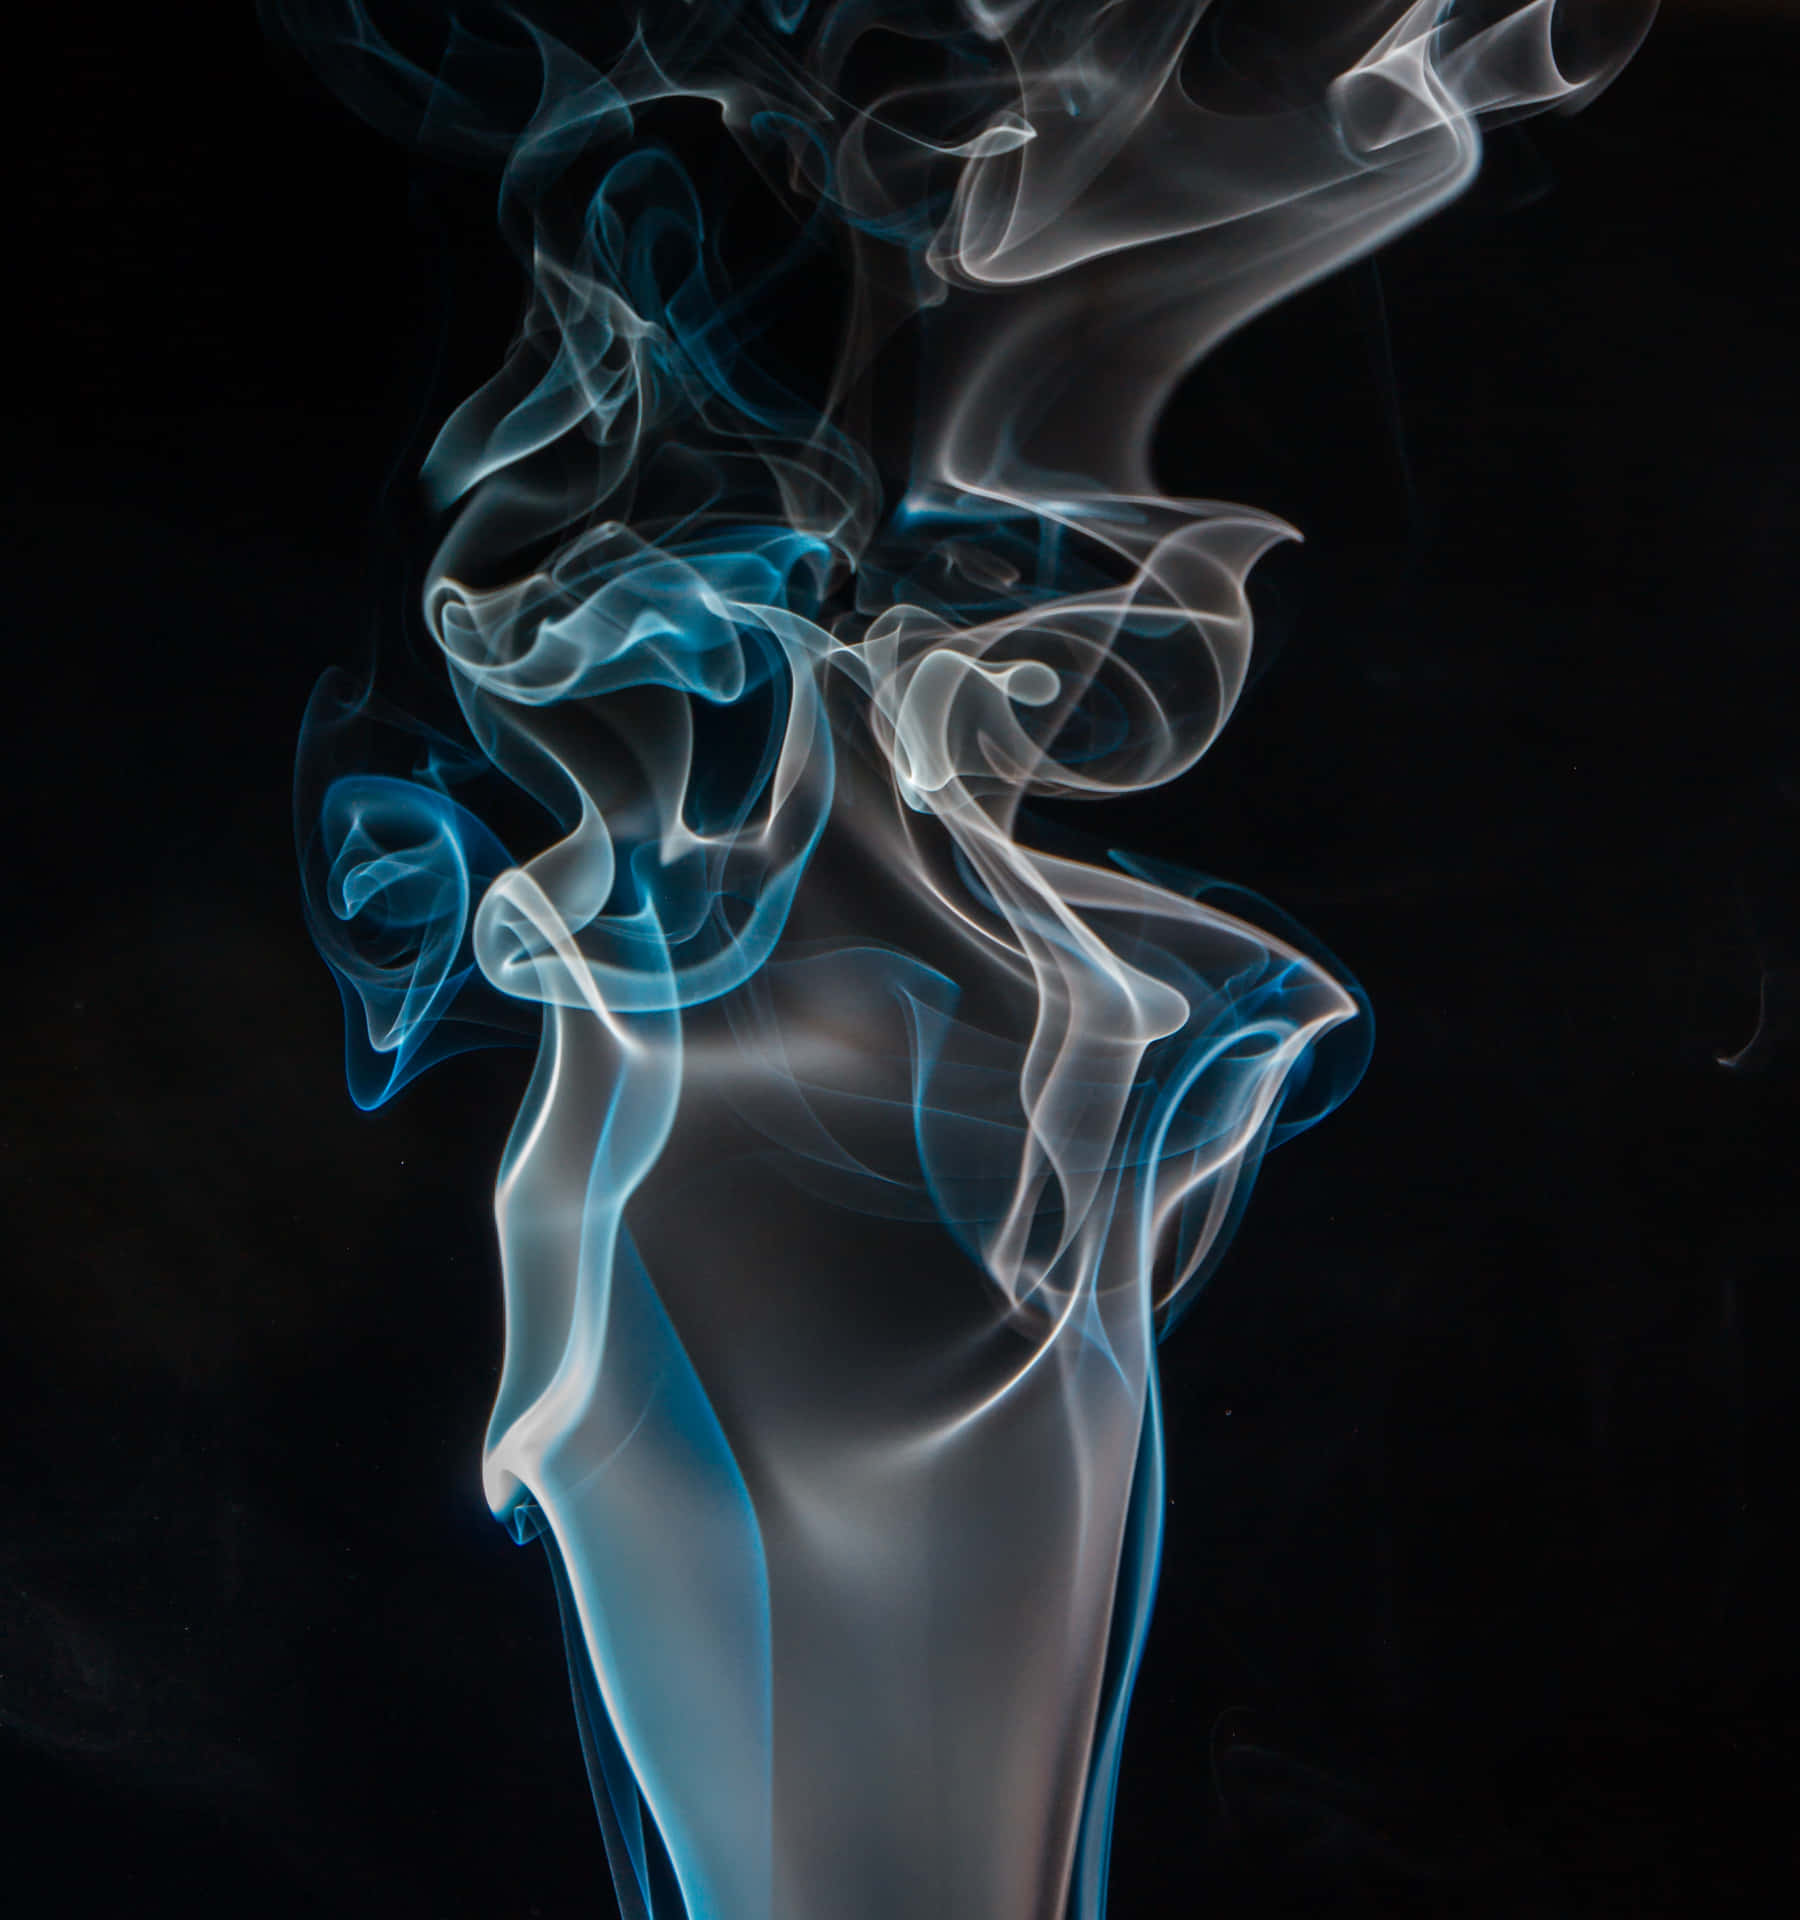 White and Blue Smoke Portrait Wallpaper